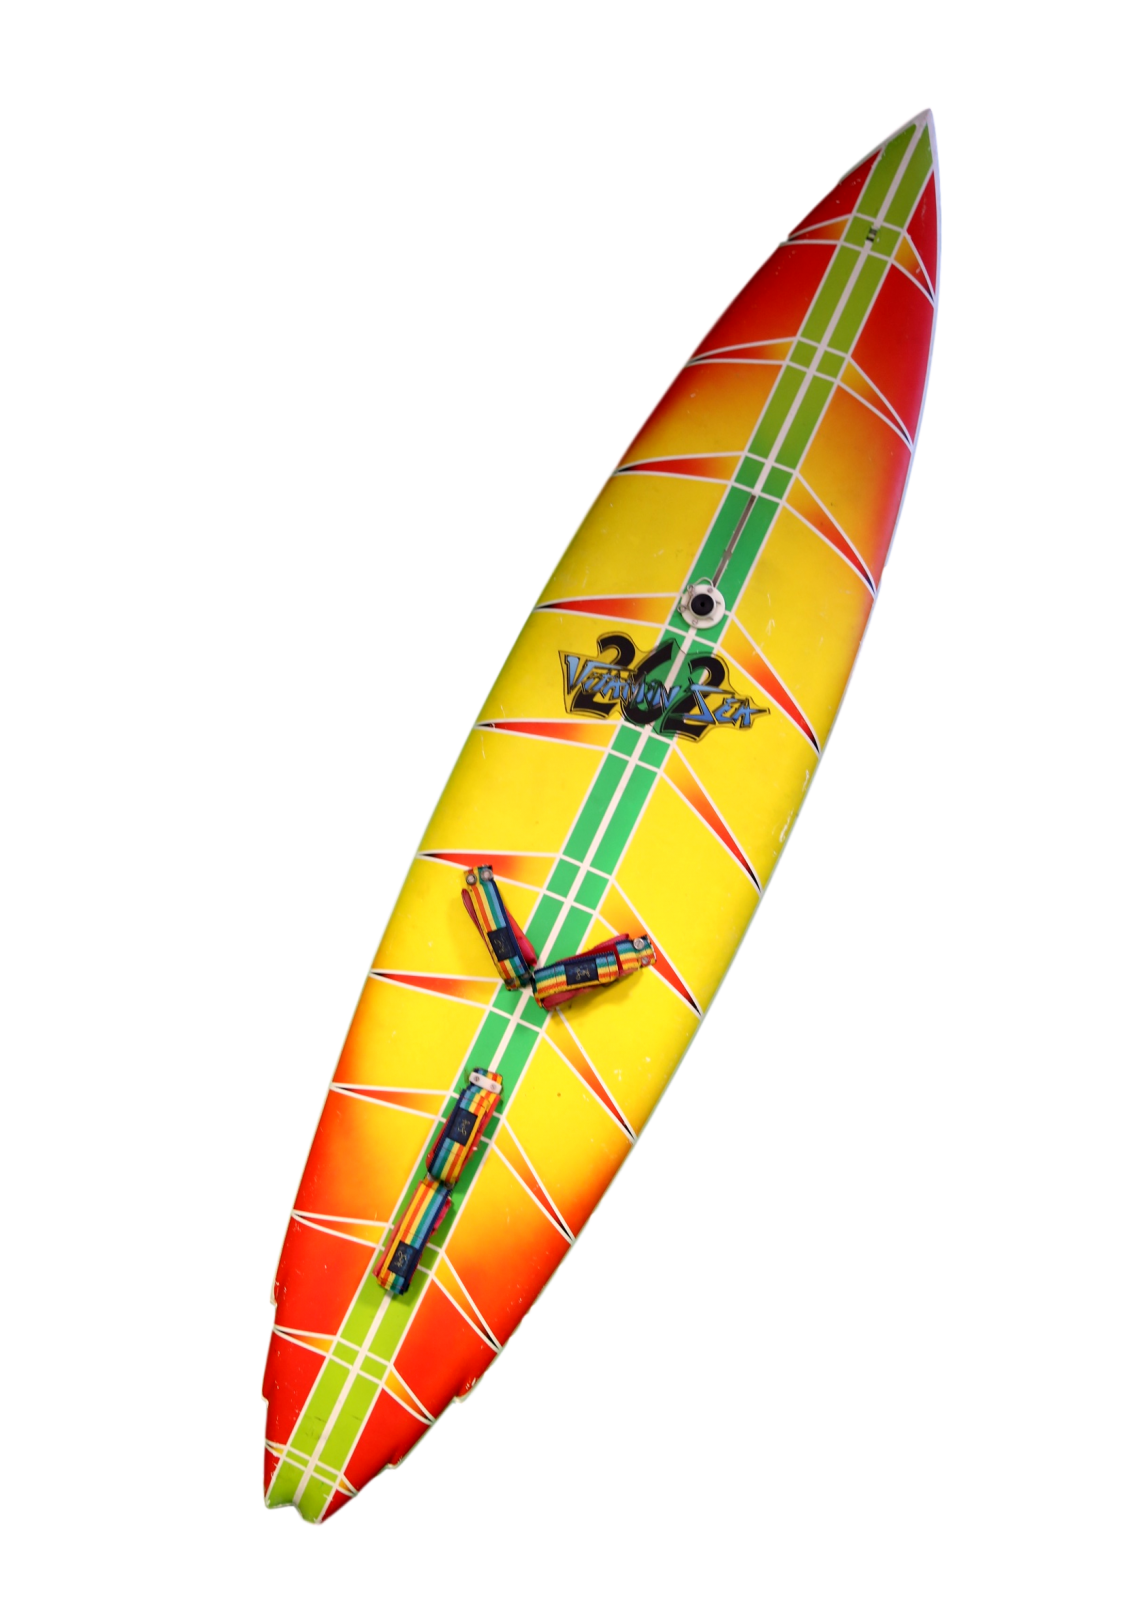 Decorative surfboard rental